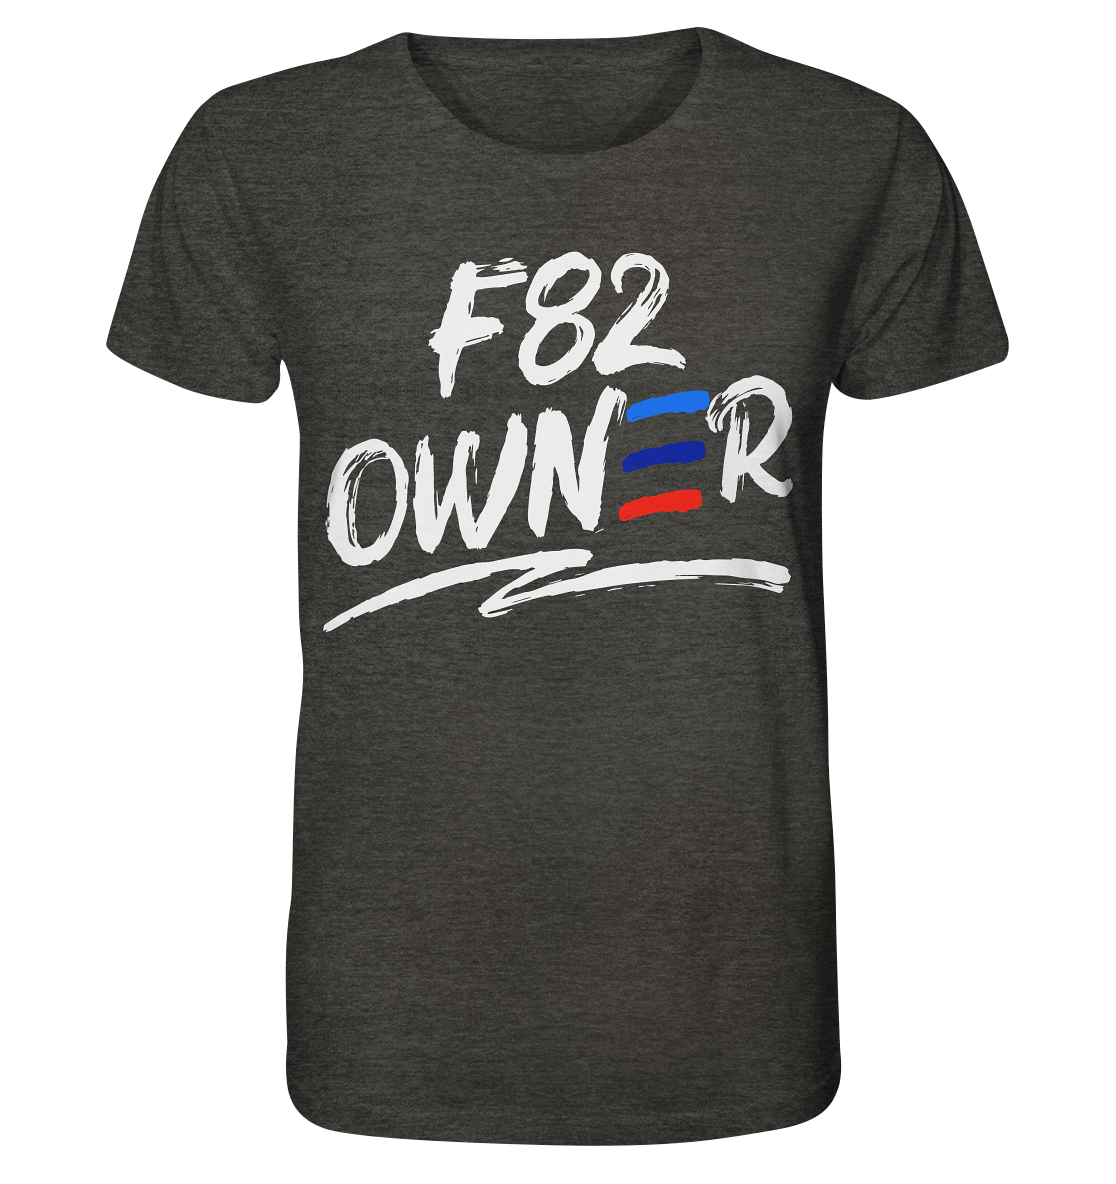 COD_BGKF82OWNER - Organic Shirt (meliert)